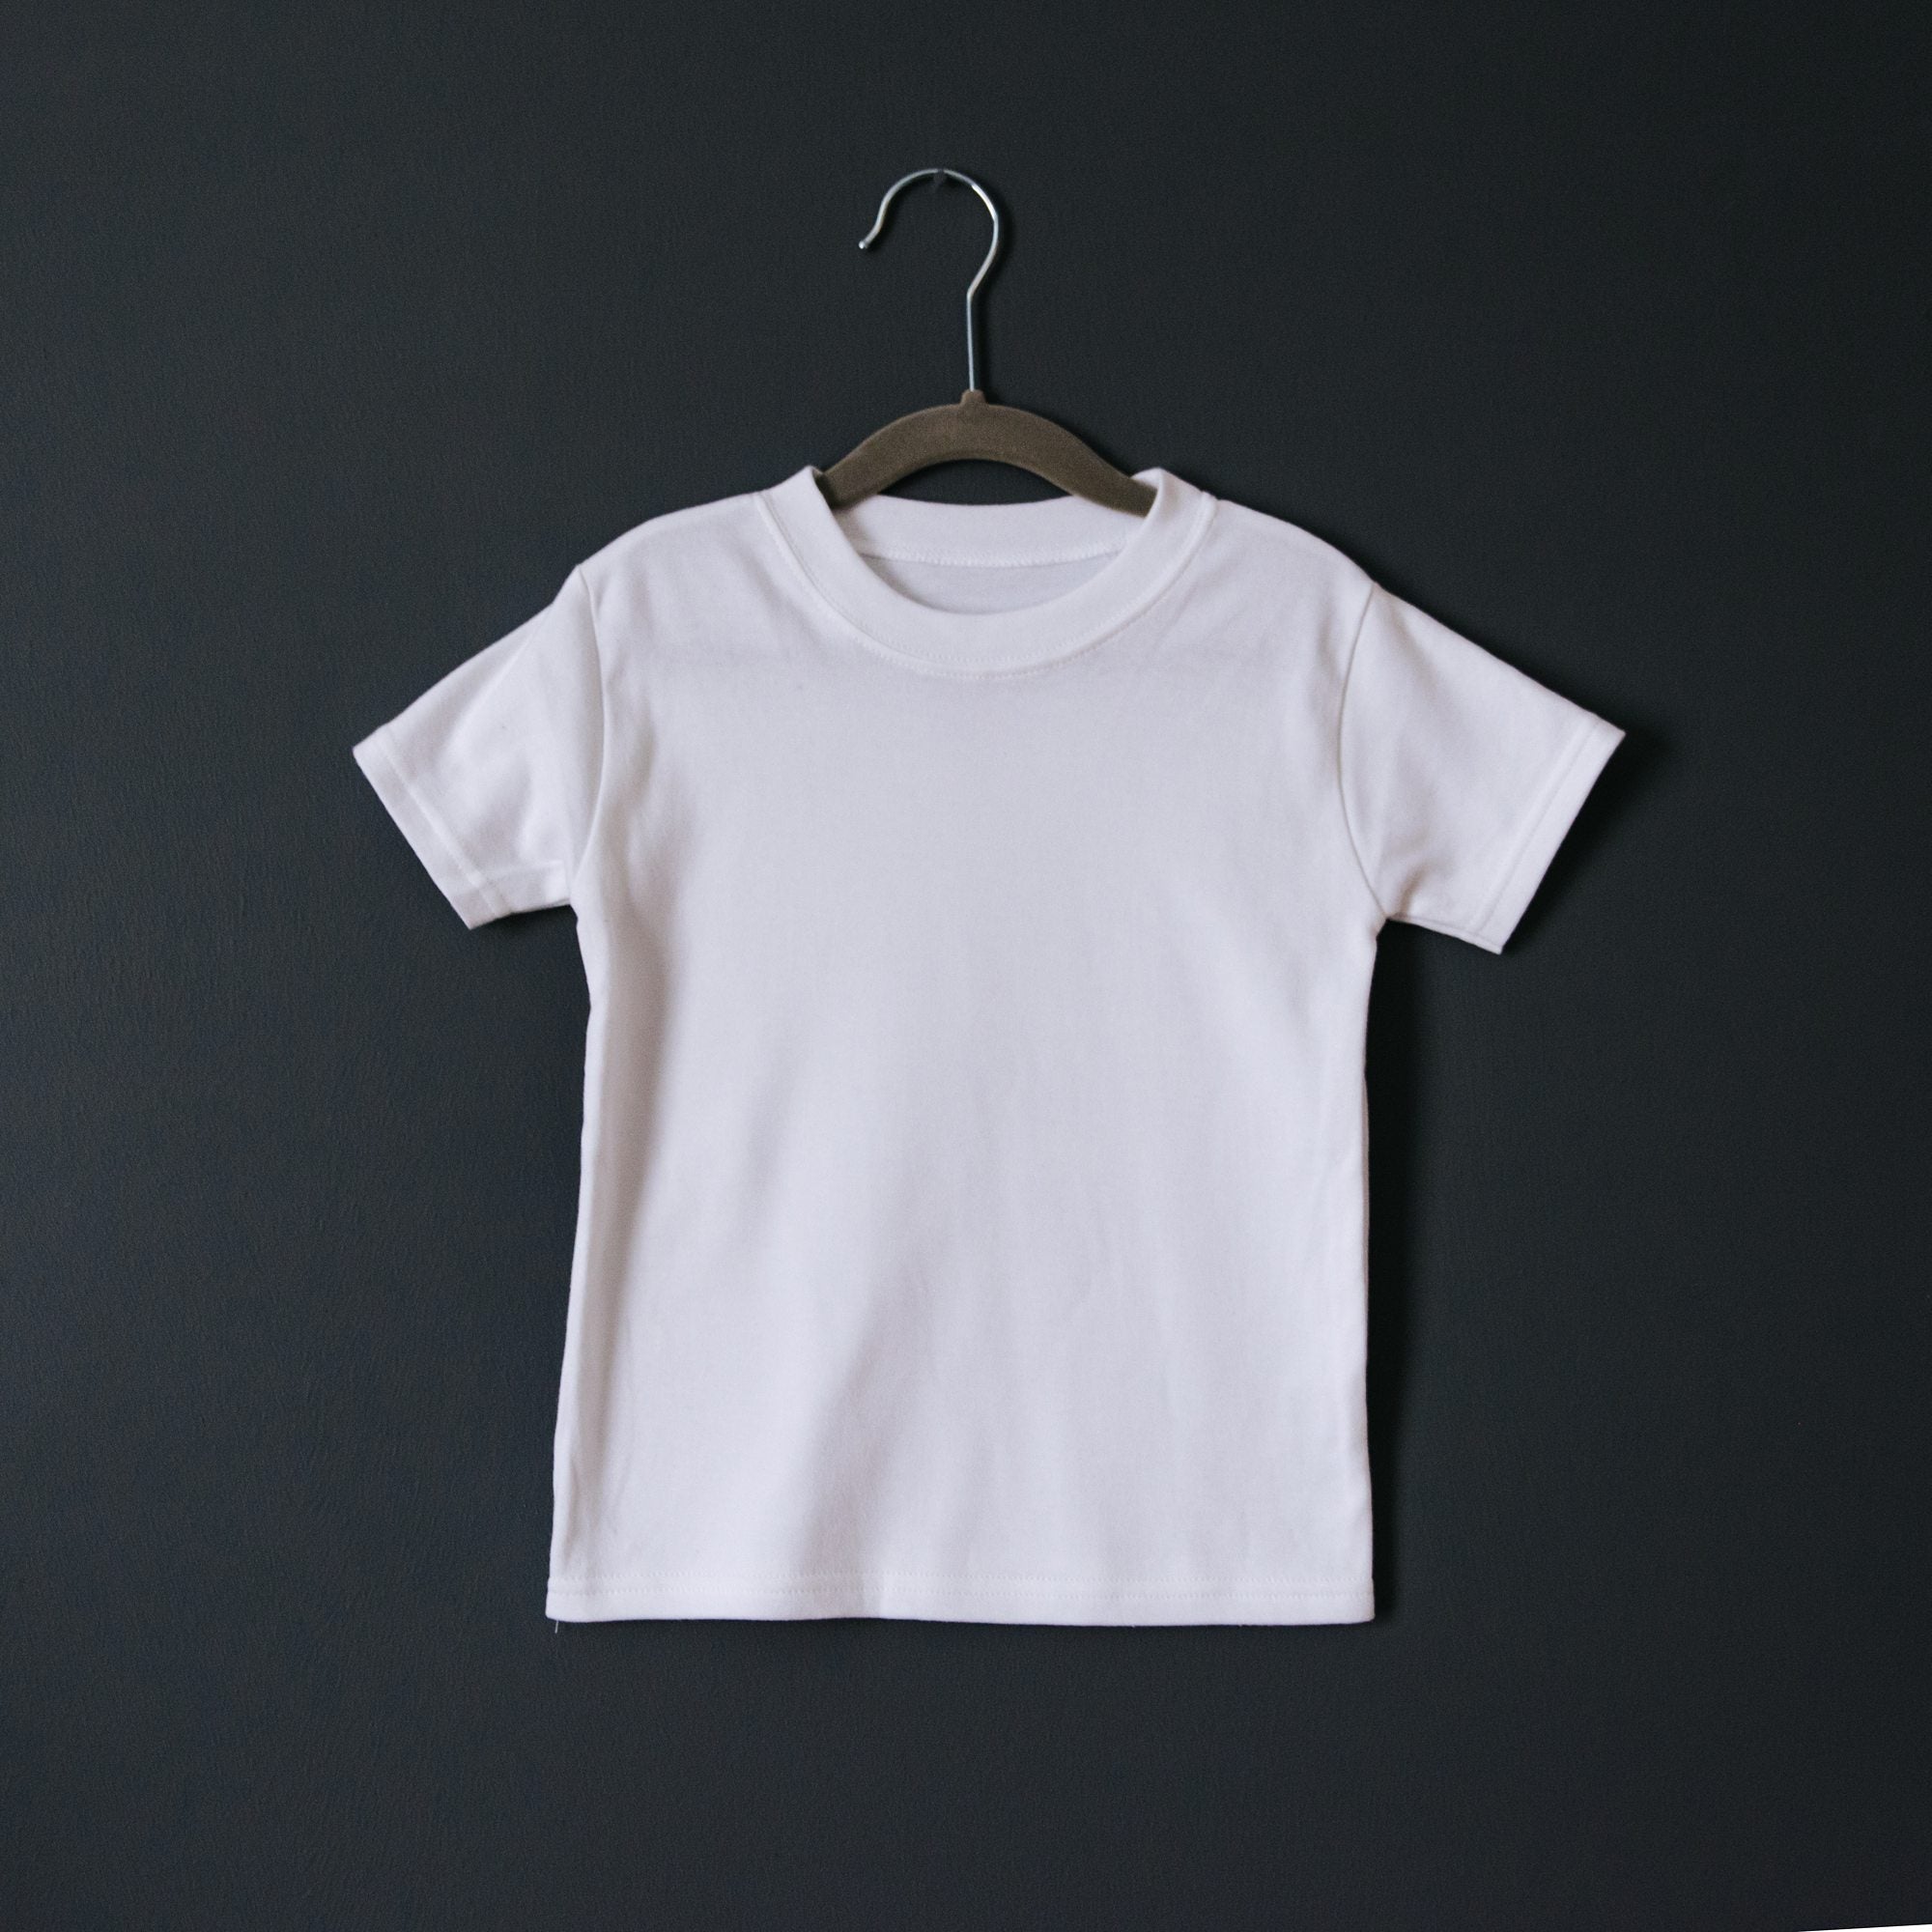 Coffee Buddies Children&#39;s T-Shirt - I am Nat Ltd - Children&#39;s T-Shirt